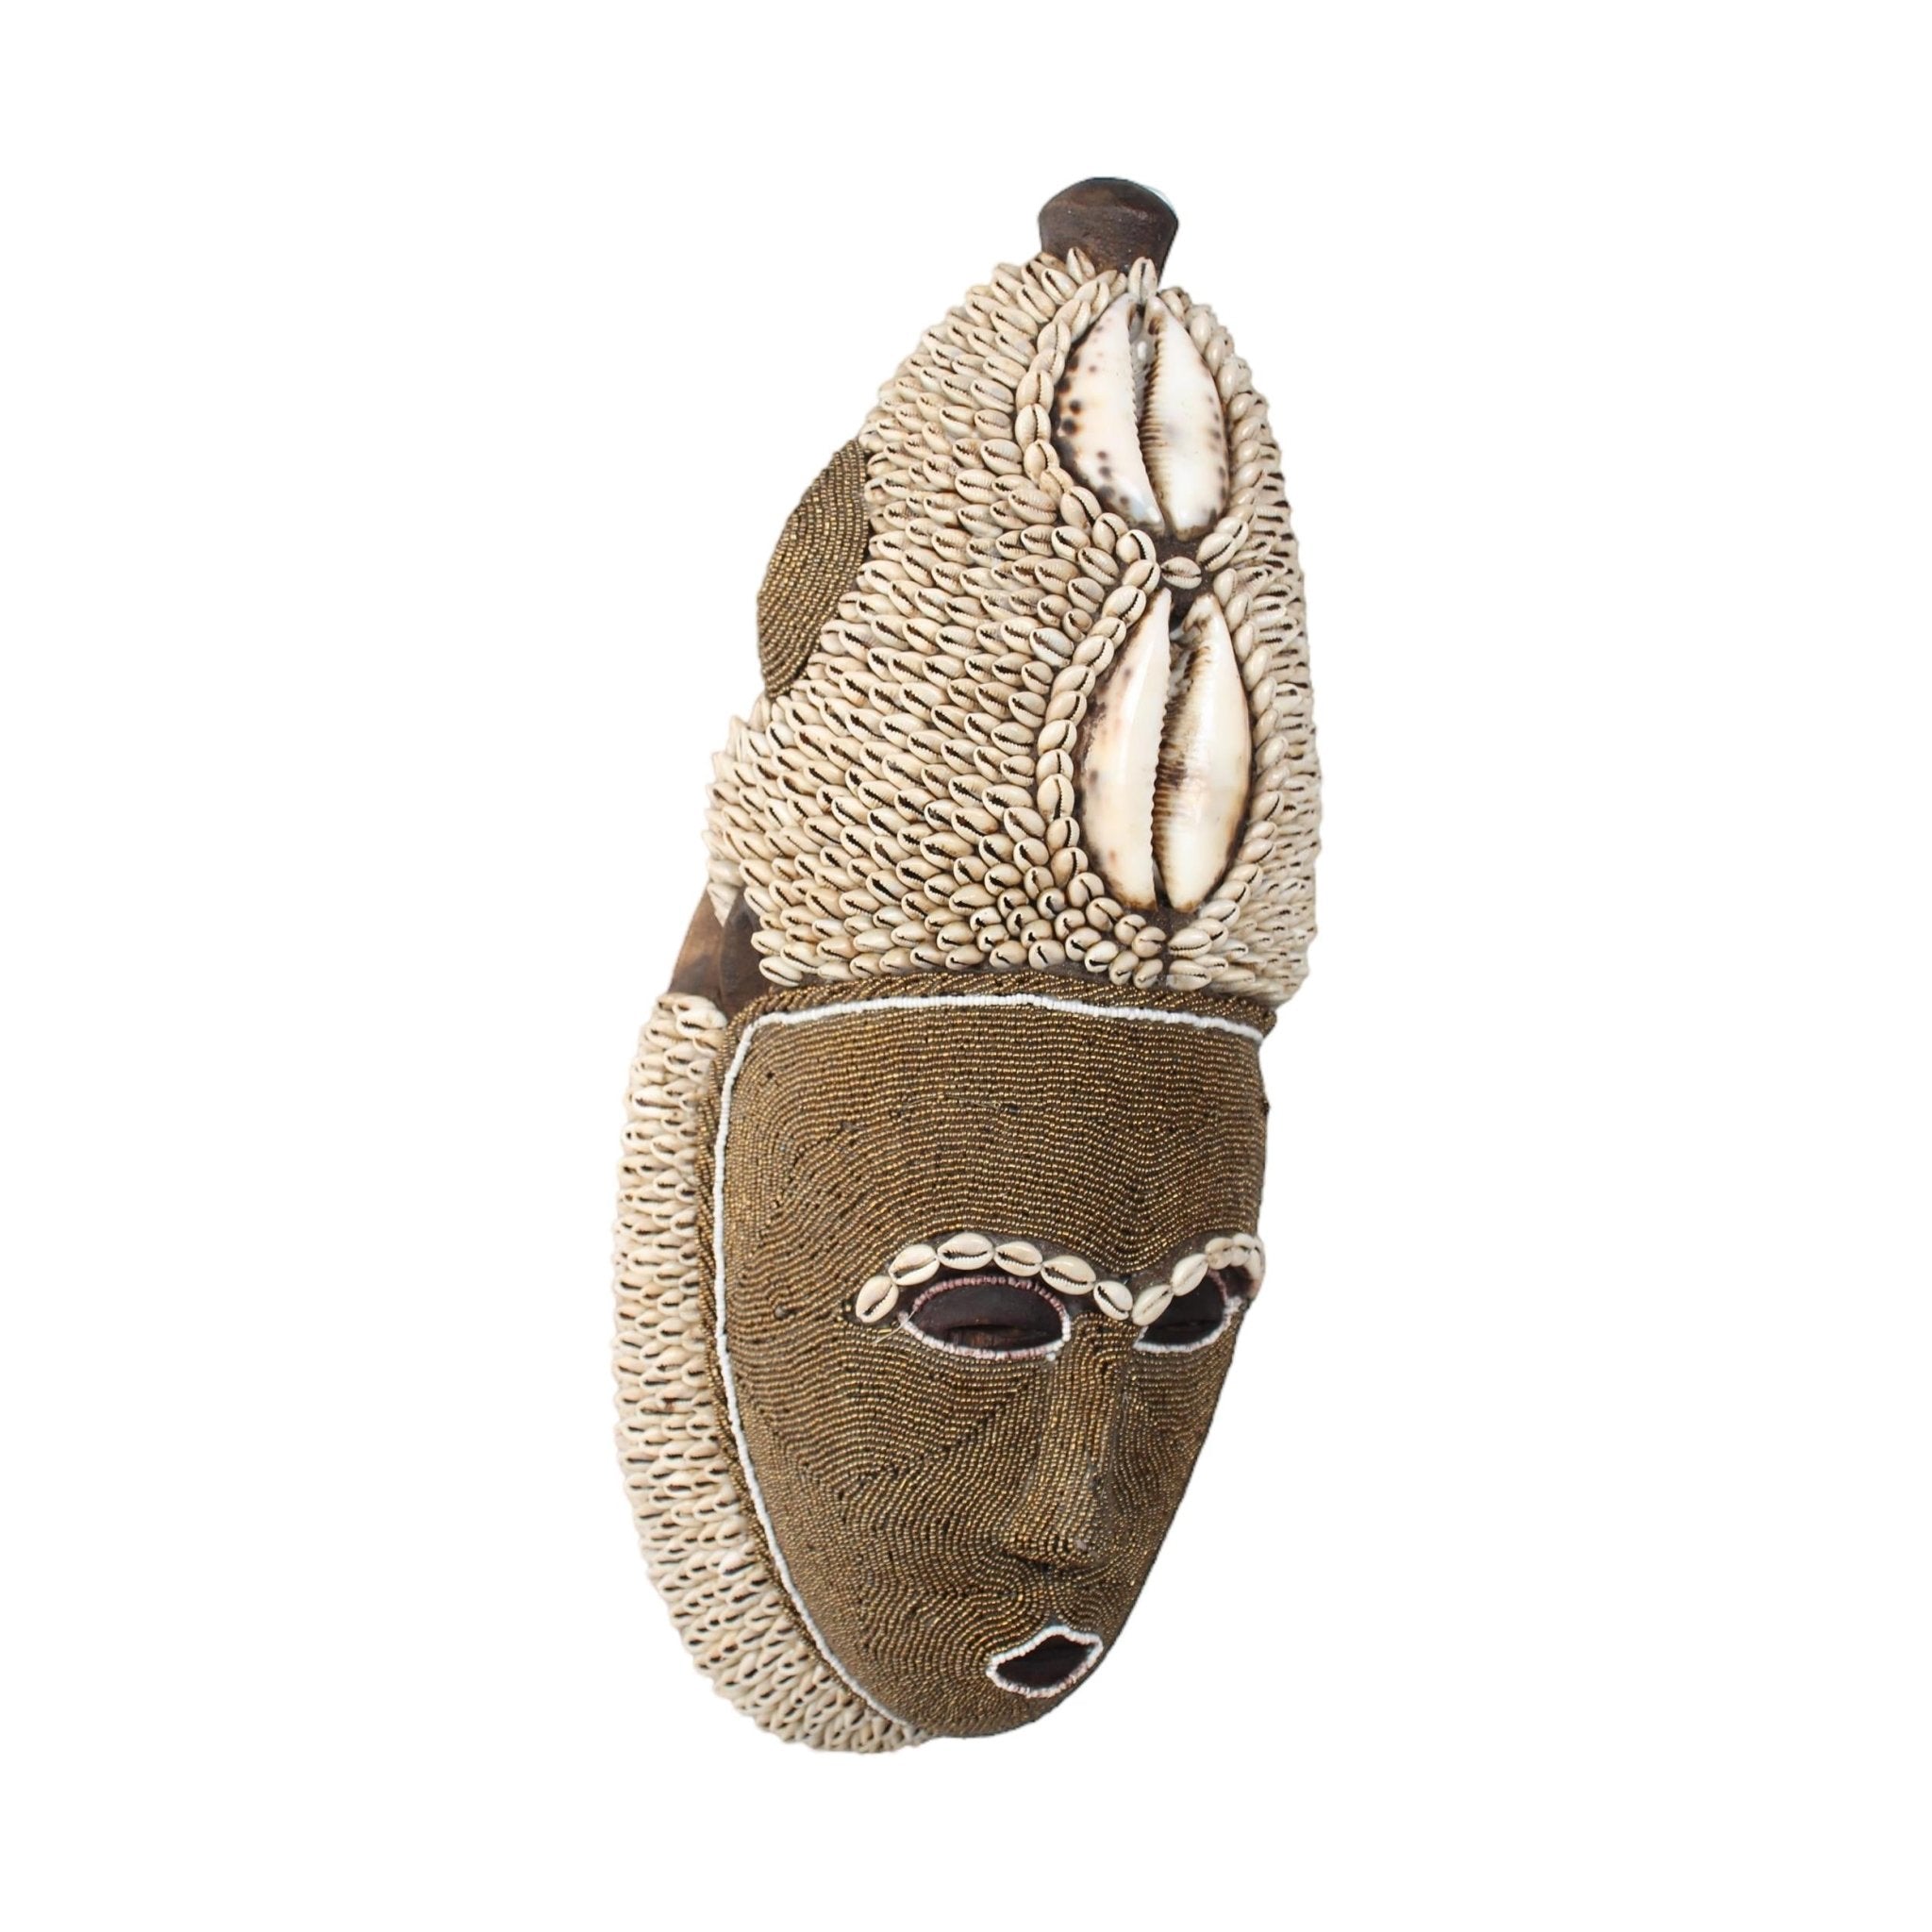 Baule Tribe Mask ~19.7" Tall - African Angel Art - Mask